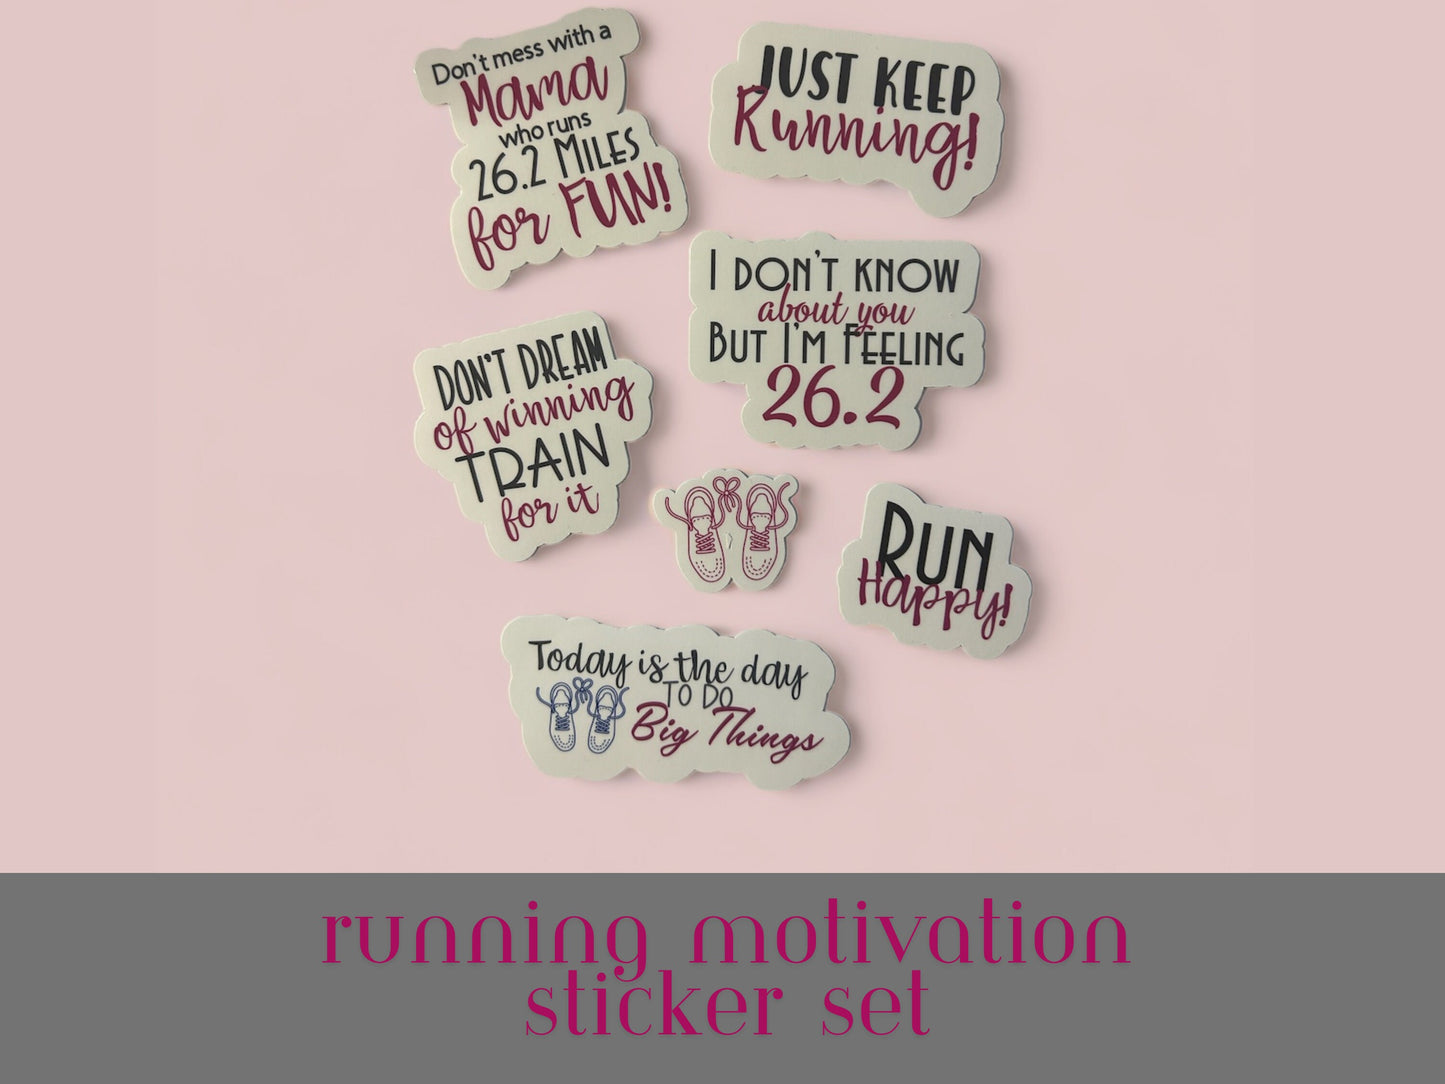 Motivation Running Sticker Set of 7 Stickers |